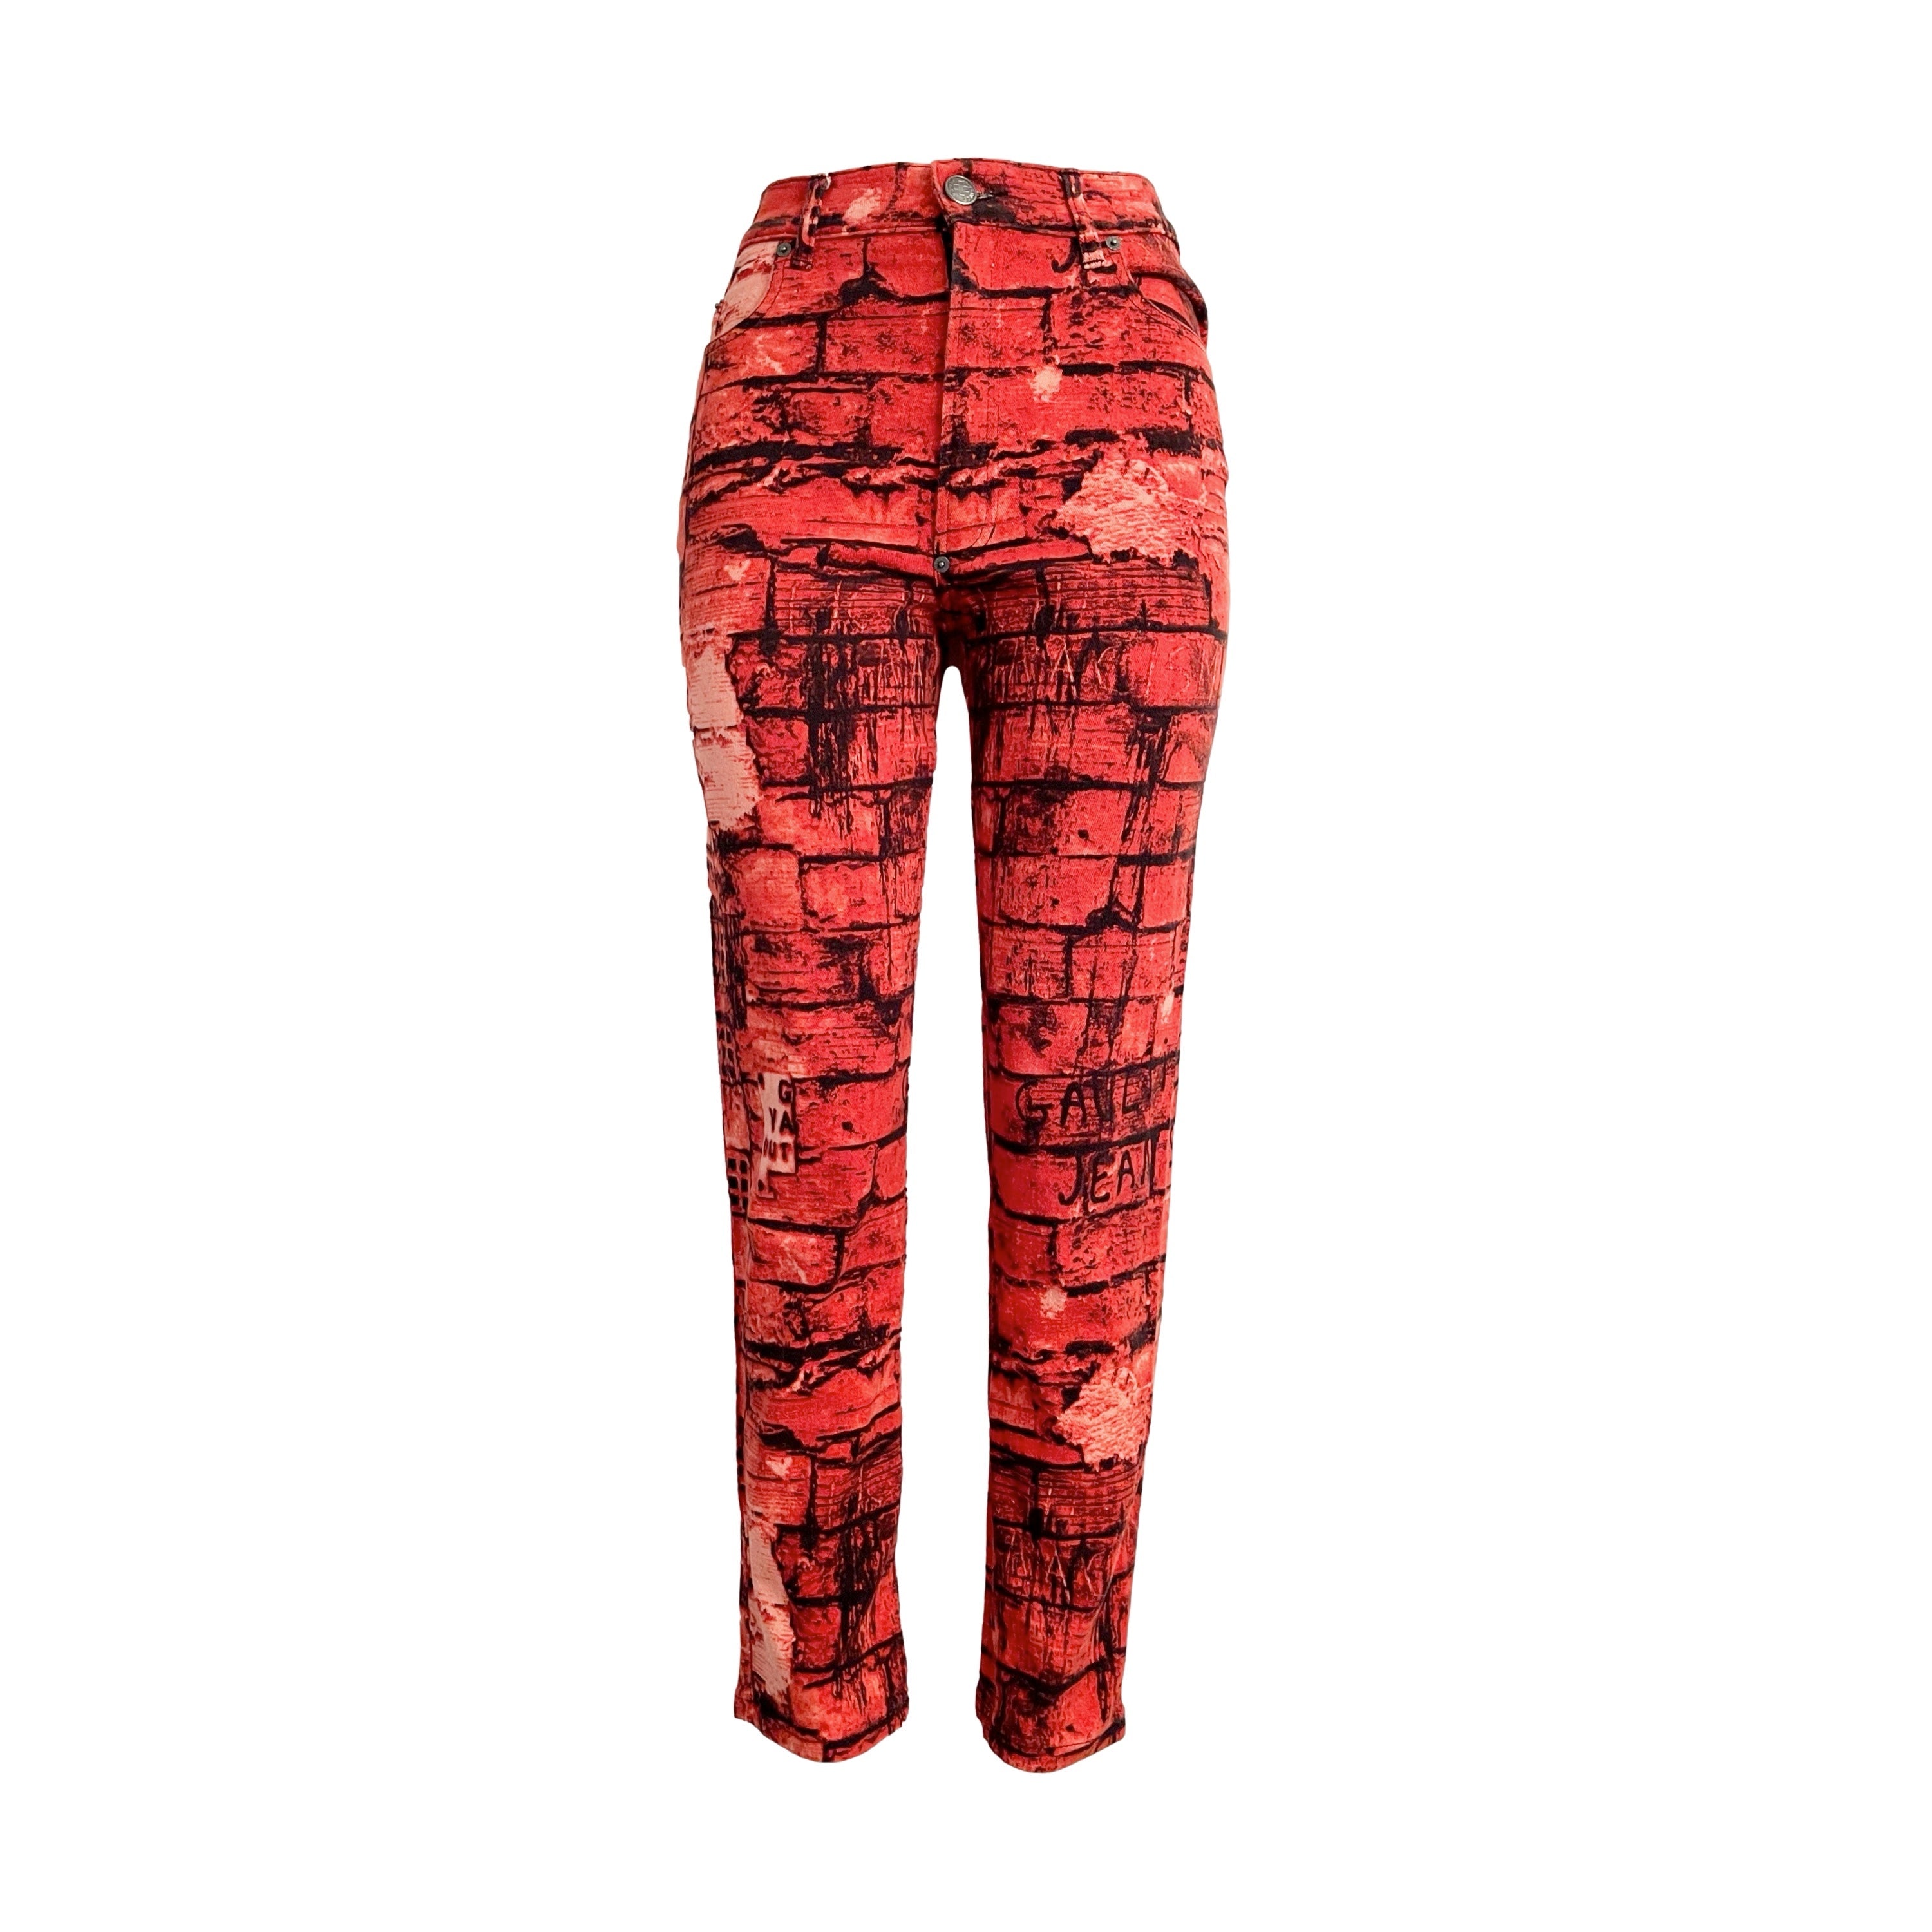 Jean Paul Gaultier Red Brick Pants - Apparel